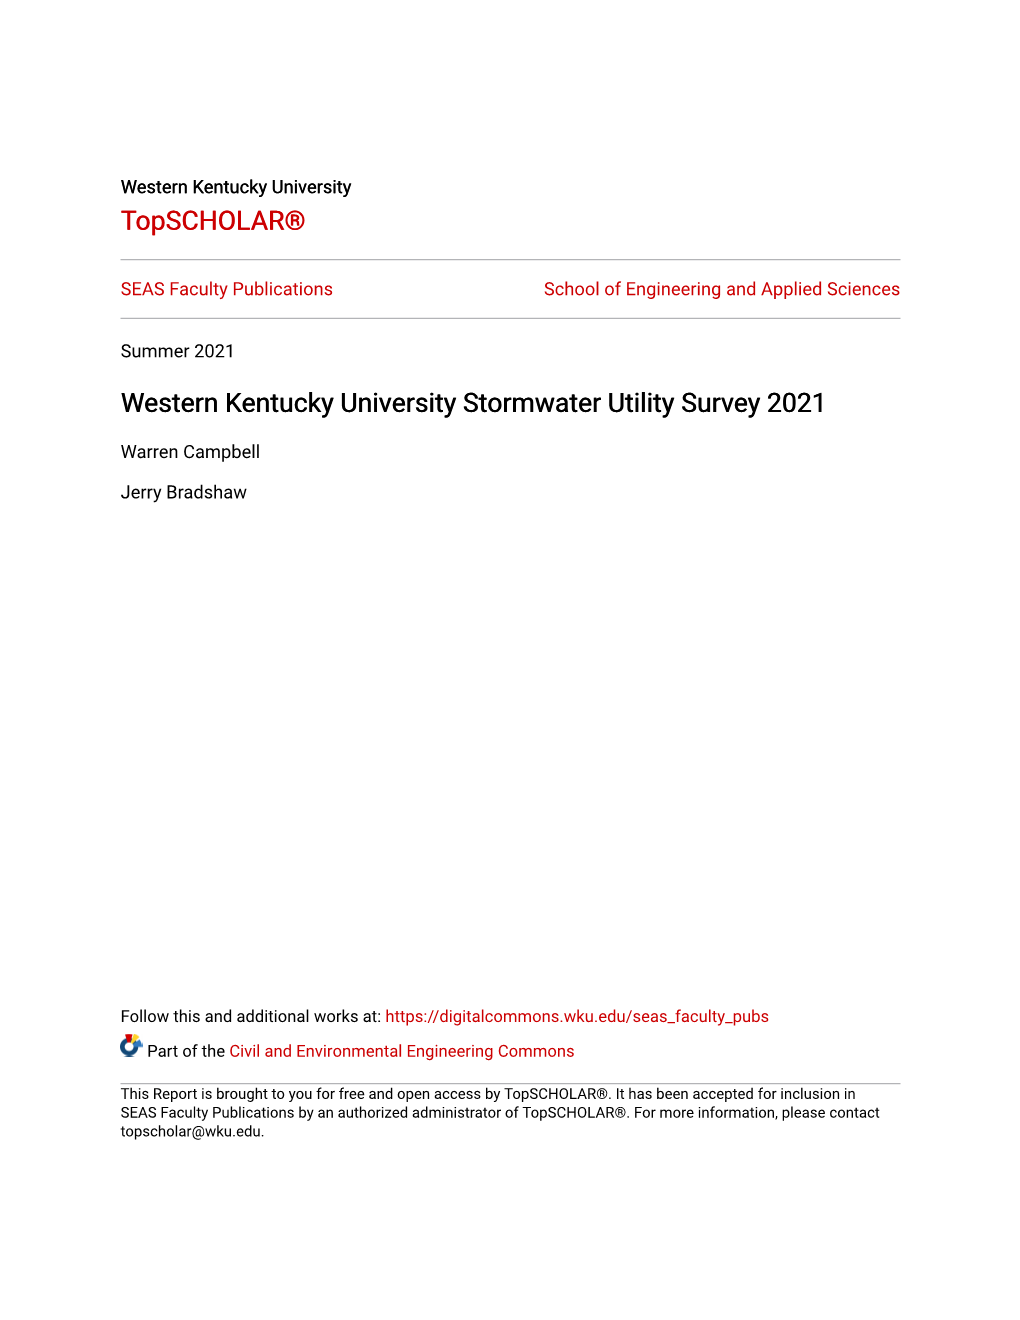 Western Kentucky University Stormwater Utility Survey 2021